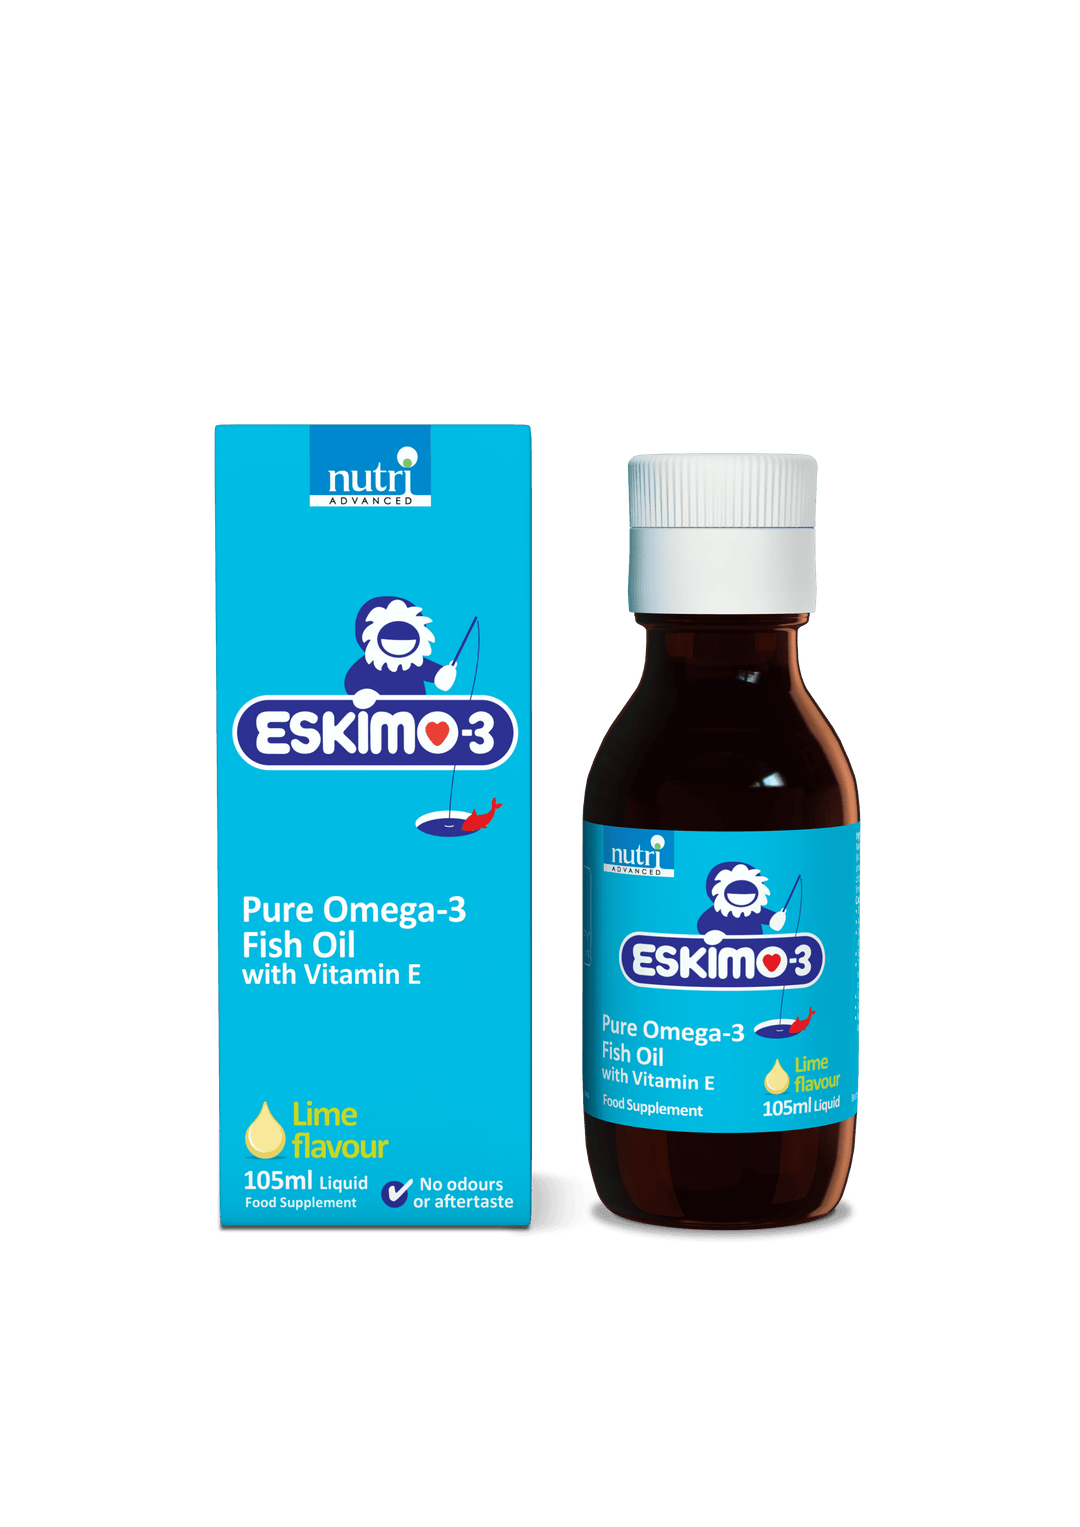 Eskimo-3 Pure Omega-3 Fish Oil Liquid 105ml